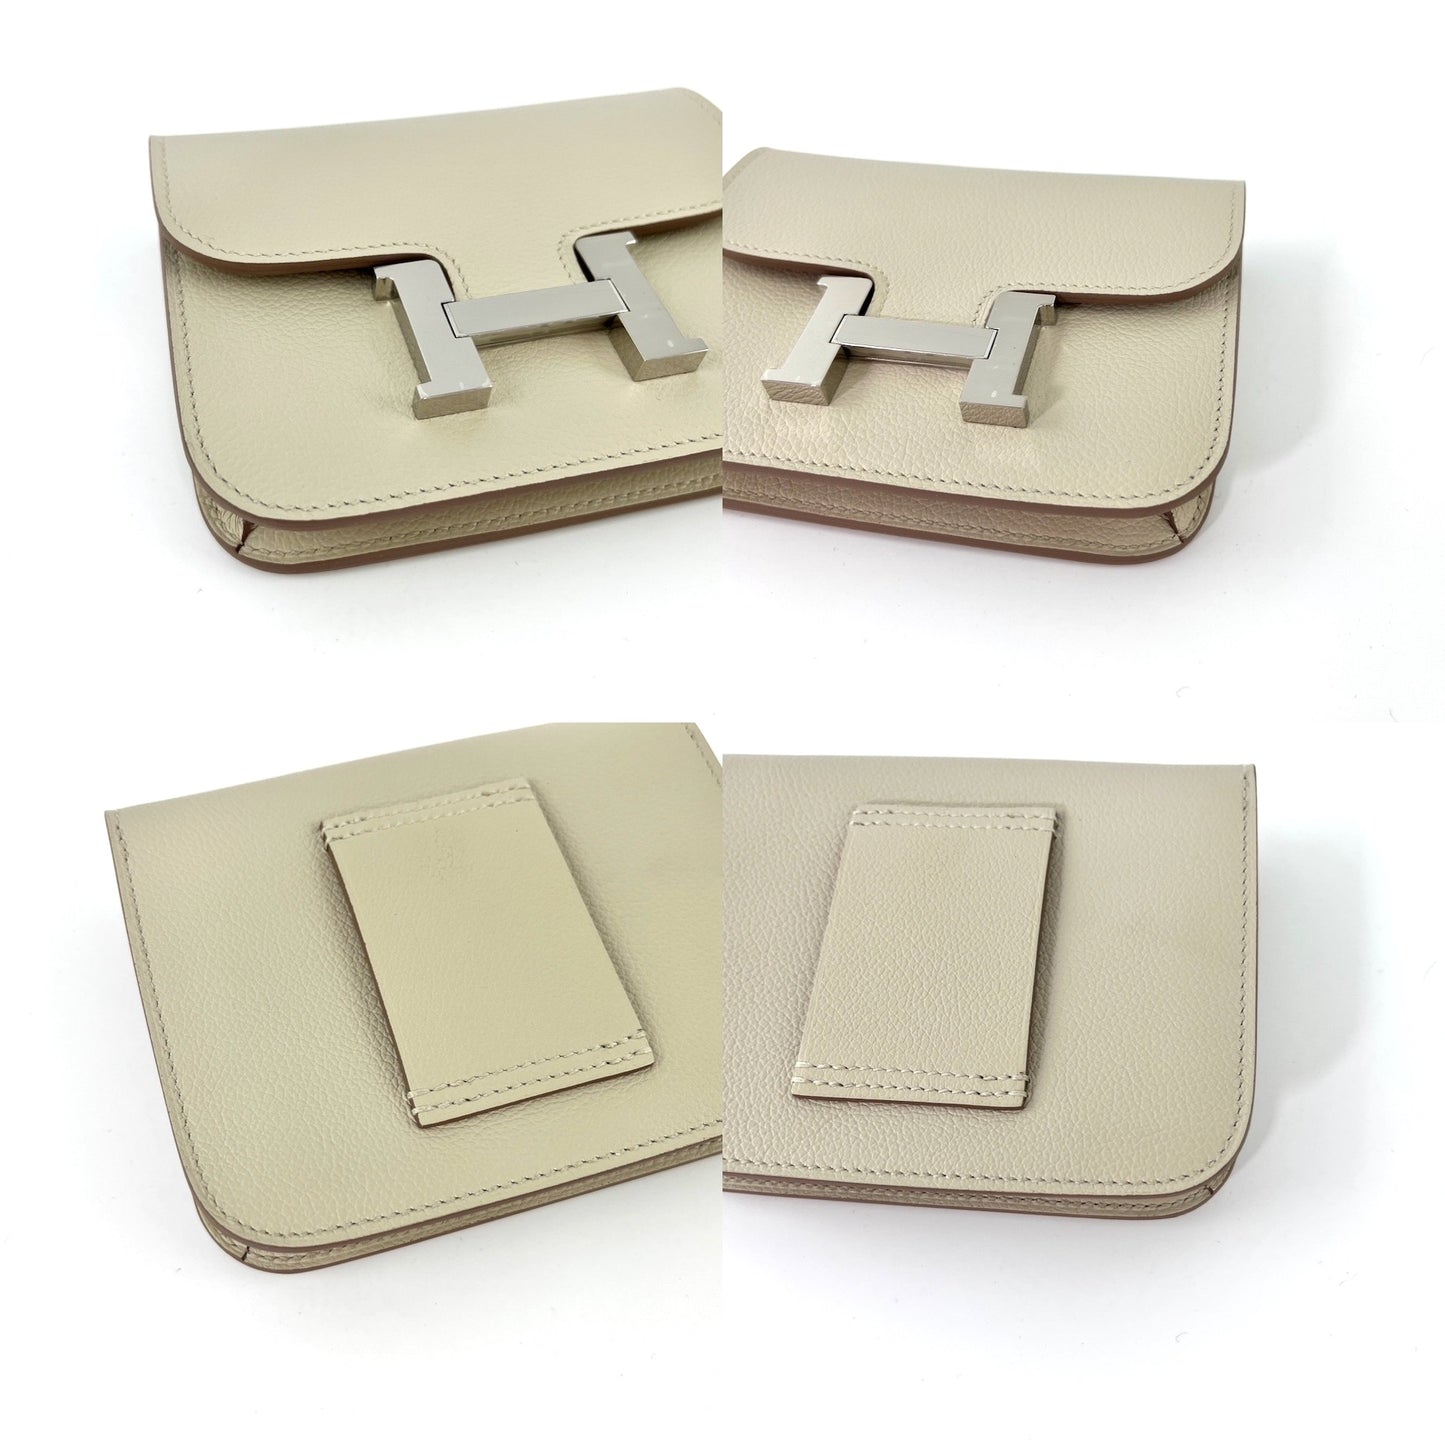 New HERMES Constance Slim Compact Beton Wallet Belt Bag